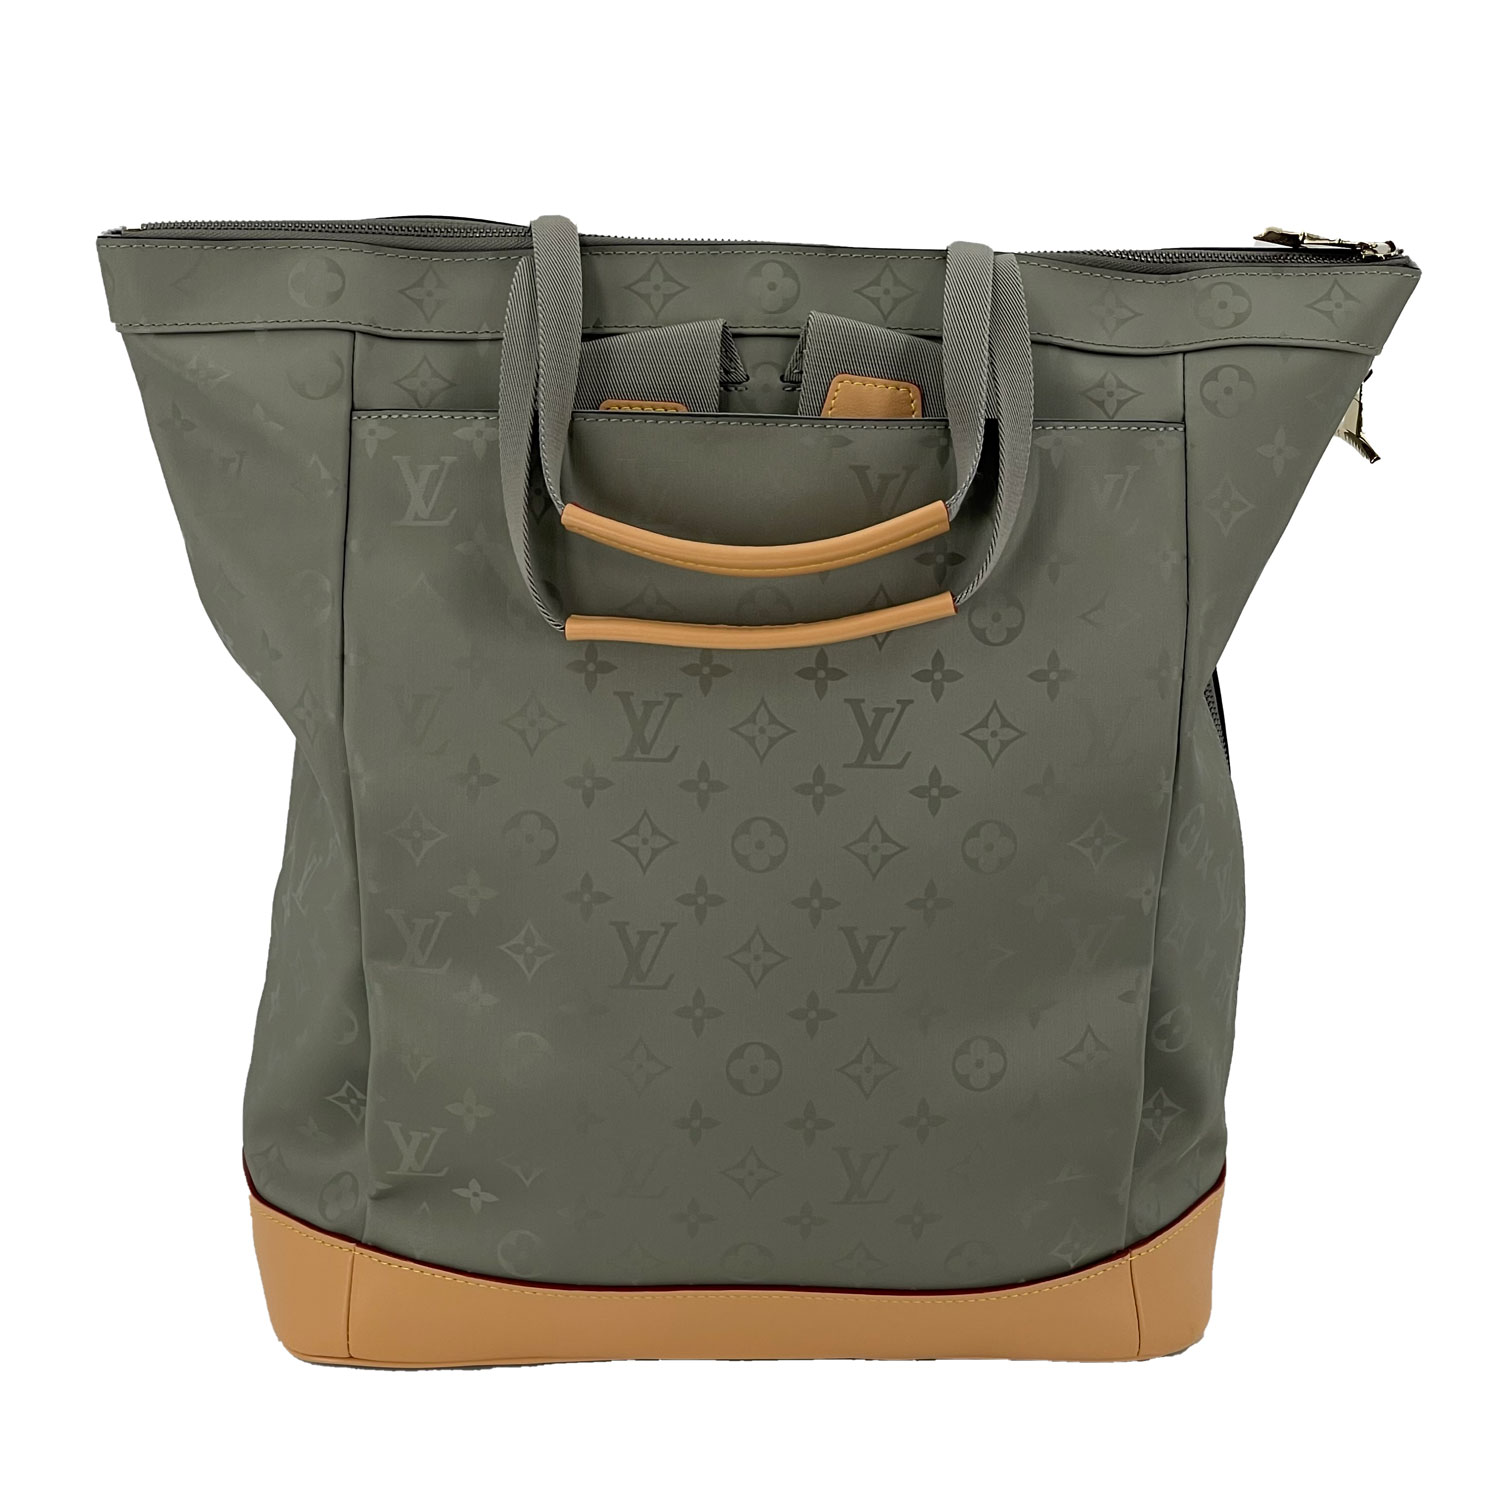 Louis Vuitton Titanium Tote Backpack